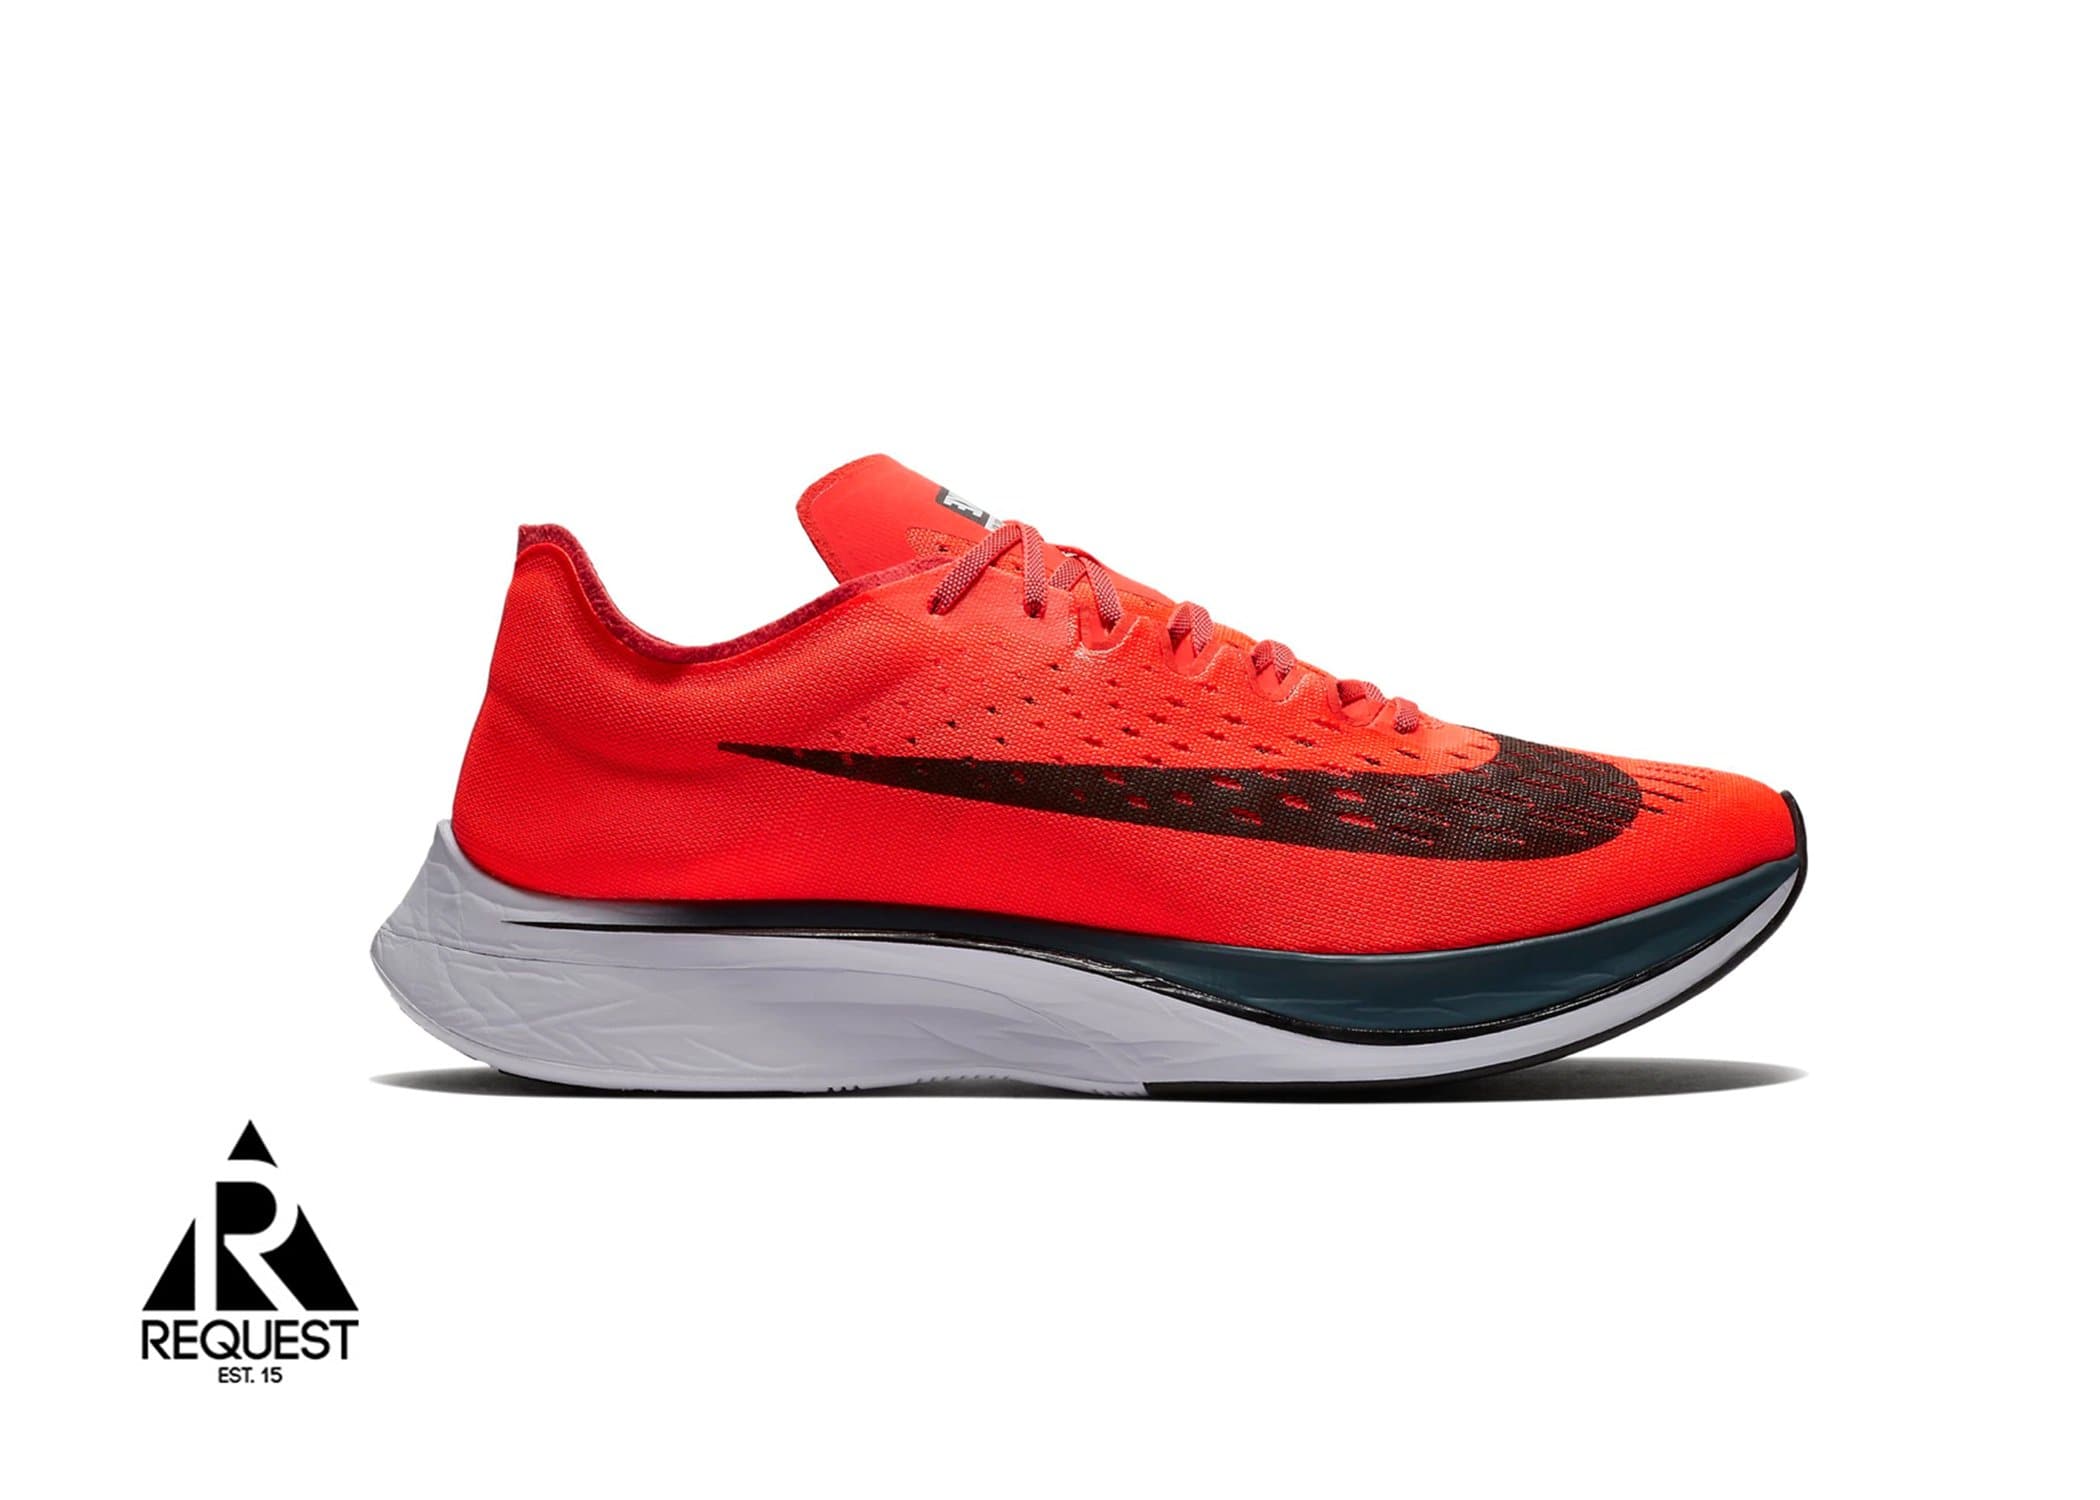 Nike Zoom Vaporfly 4% “Bright Crimson”